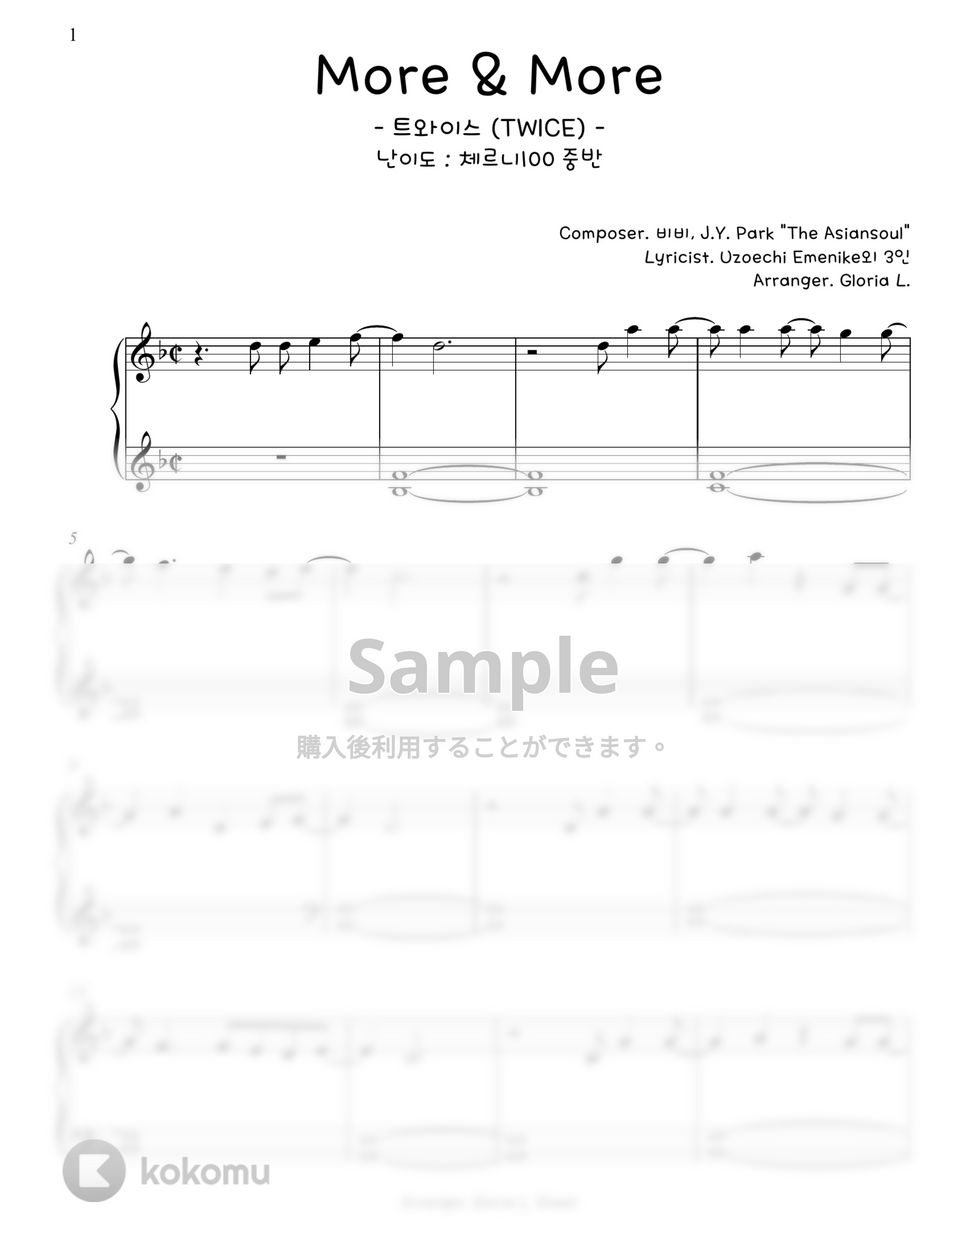 TWICE - MORE&MORE (ツェルニー100番程度) by Gloria L.